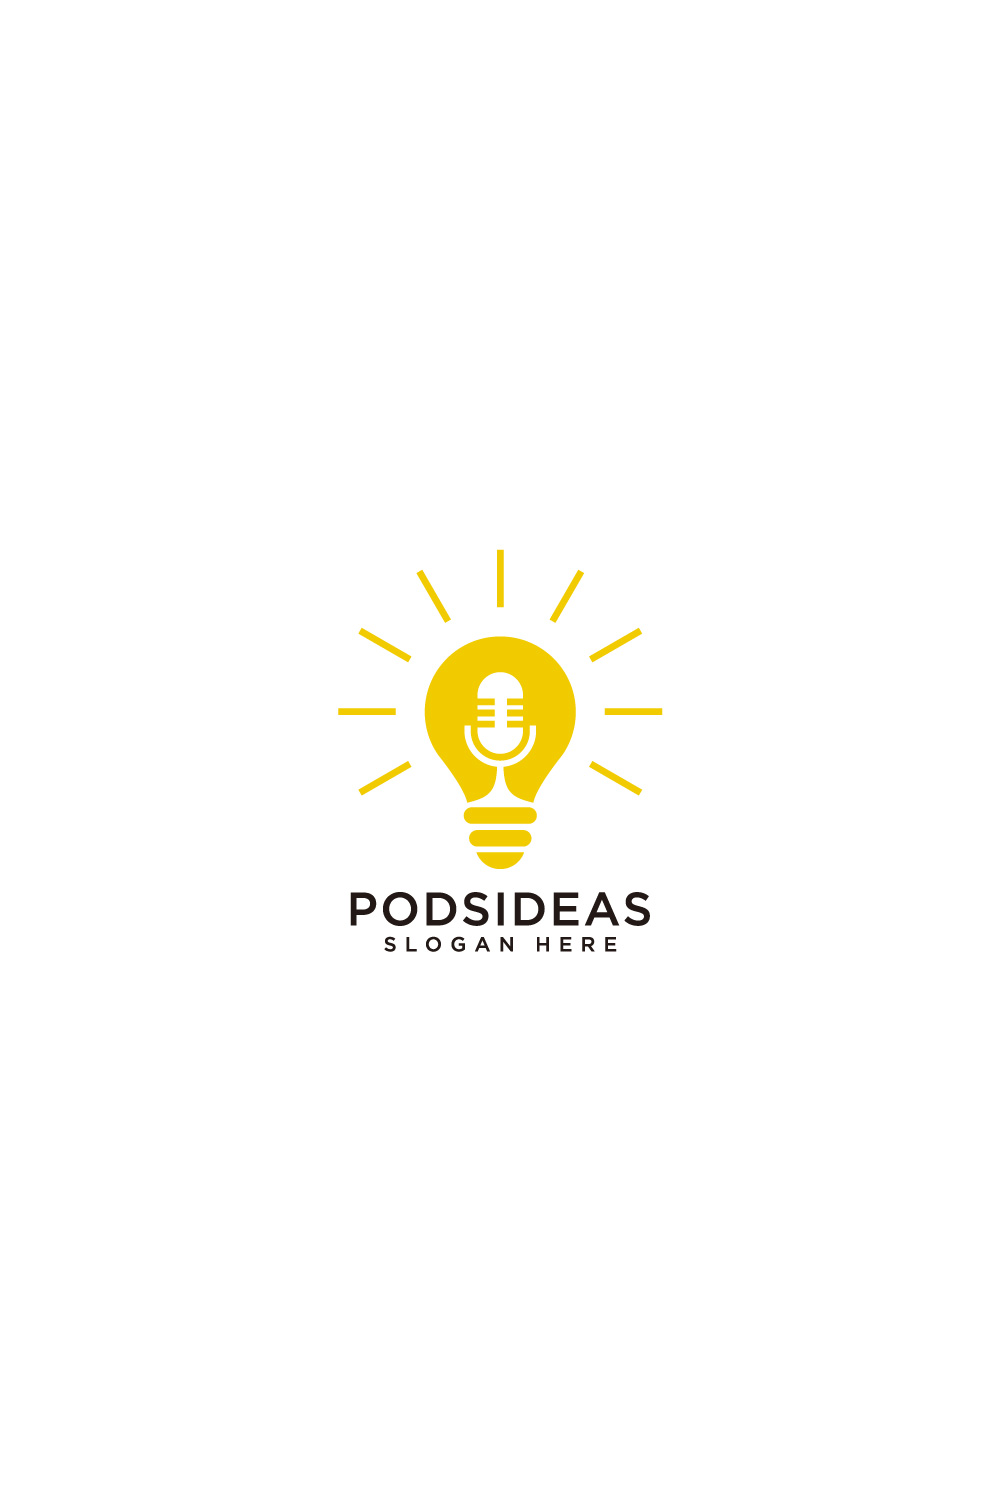 podcast with lightbulb idea logo vector design pinterest preview image.